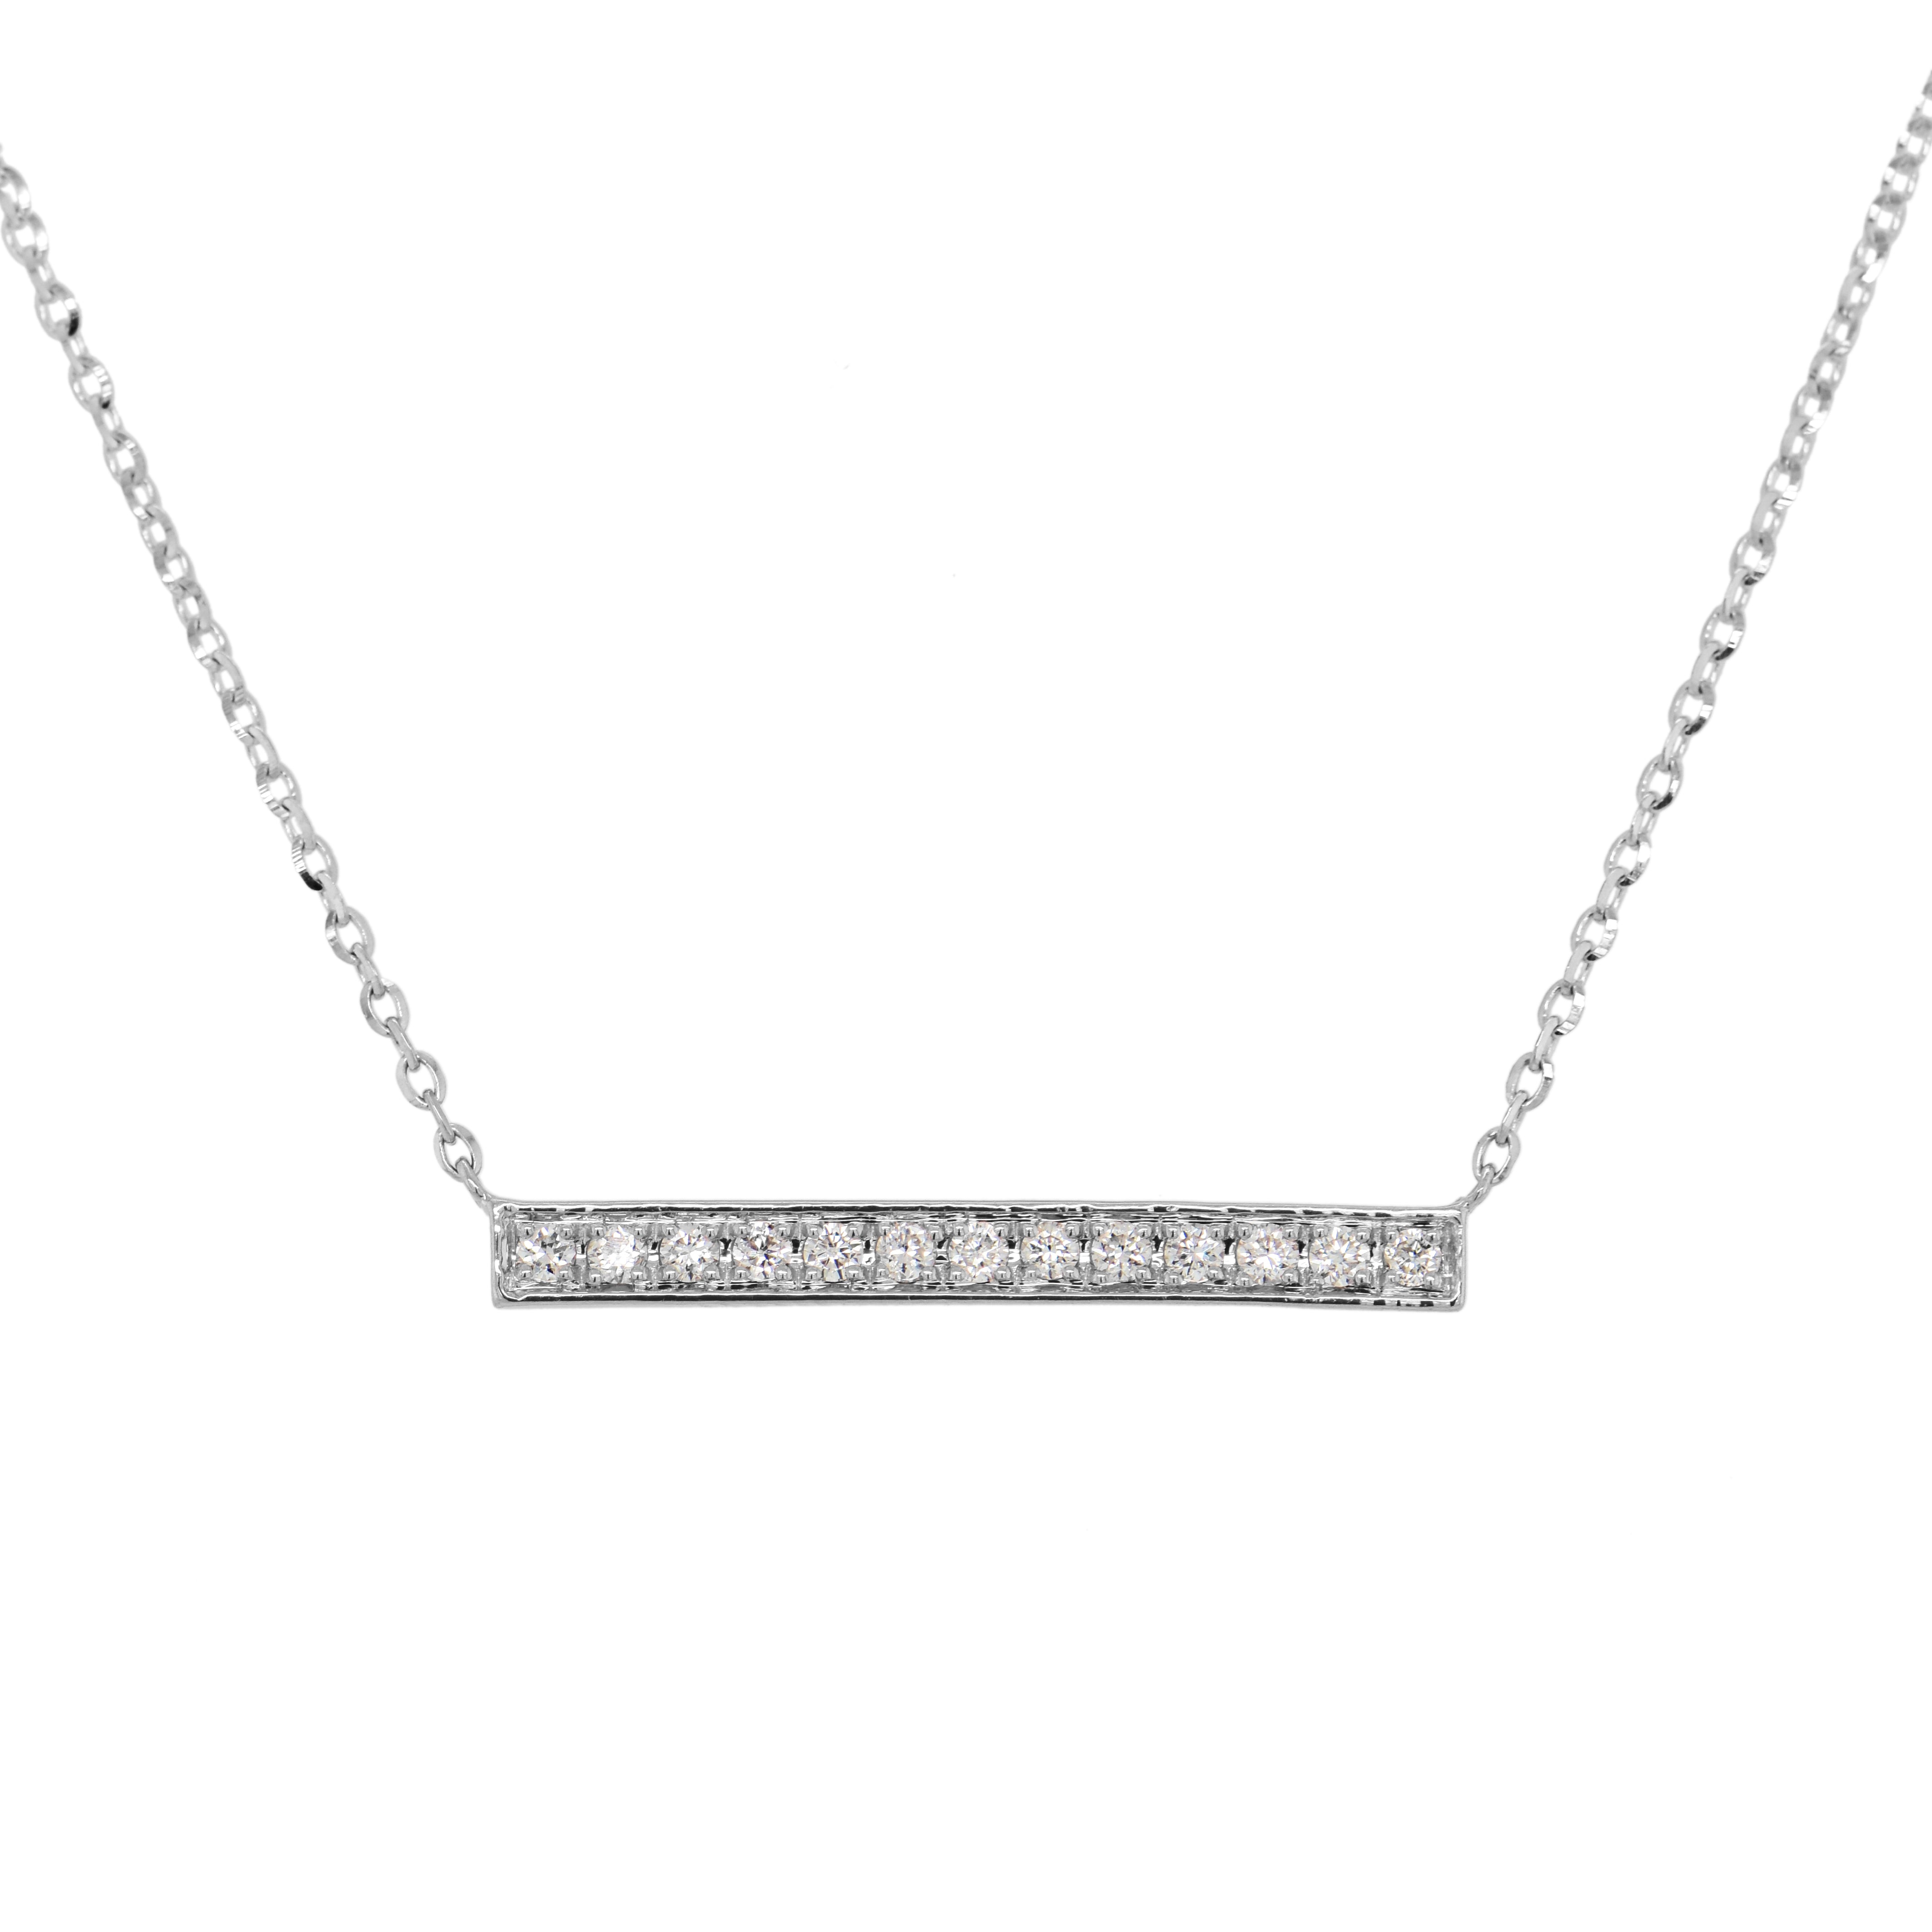 14k Gold & Diamond Bar Necklace (Adjustable)